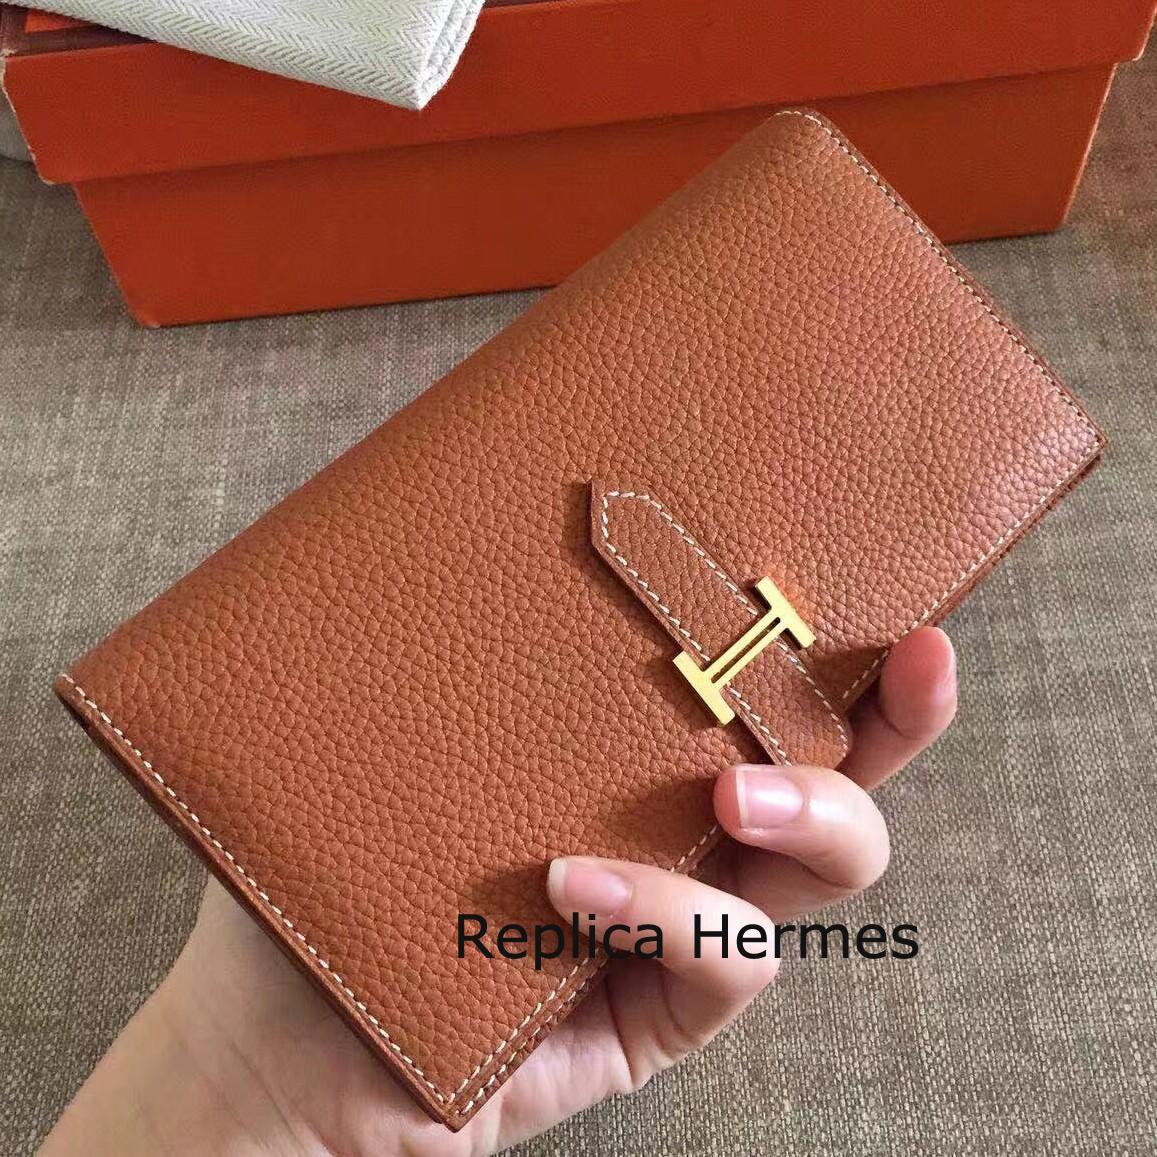 Replica Hermes Brown Clemence Bearn Gusset Wallet